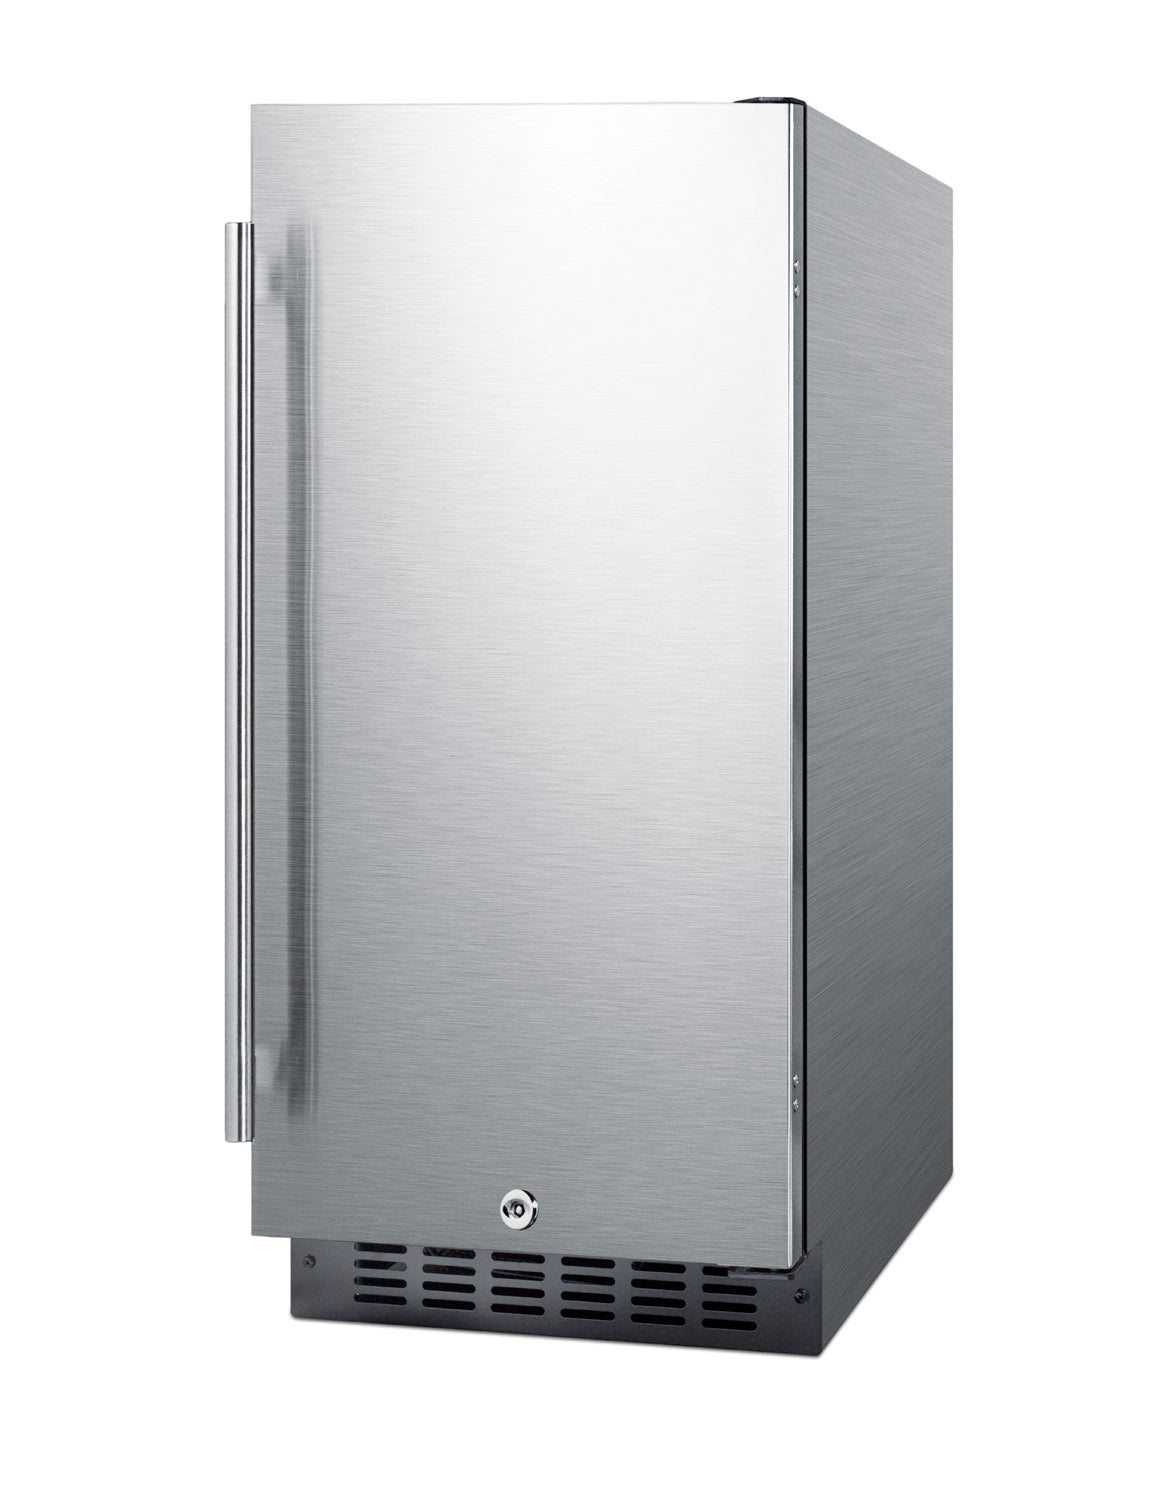 SUMMIT 15 in. Built-In All-Refrigerator, ADA Compliant (ALR15)